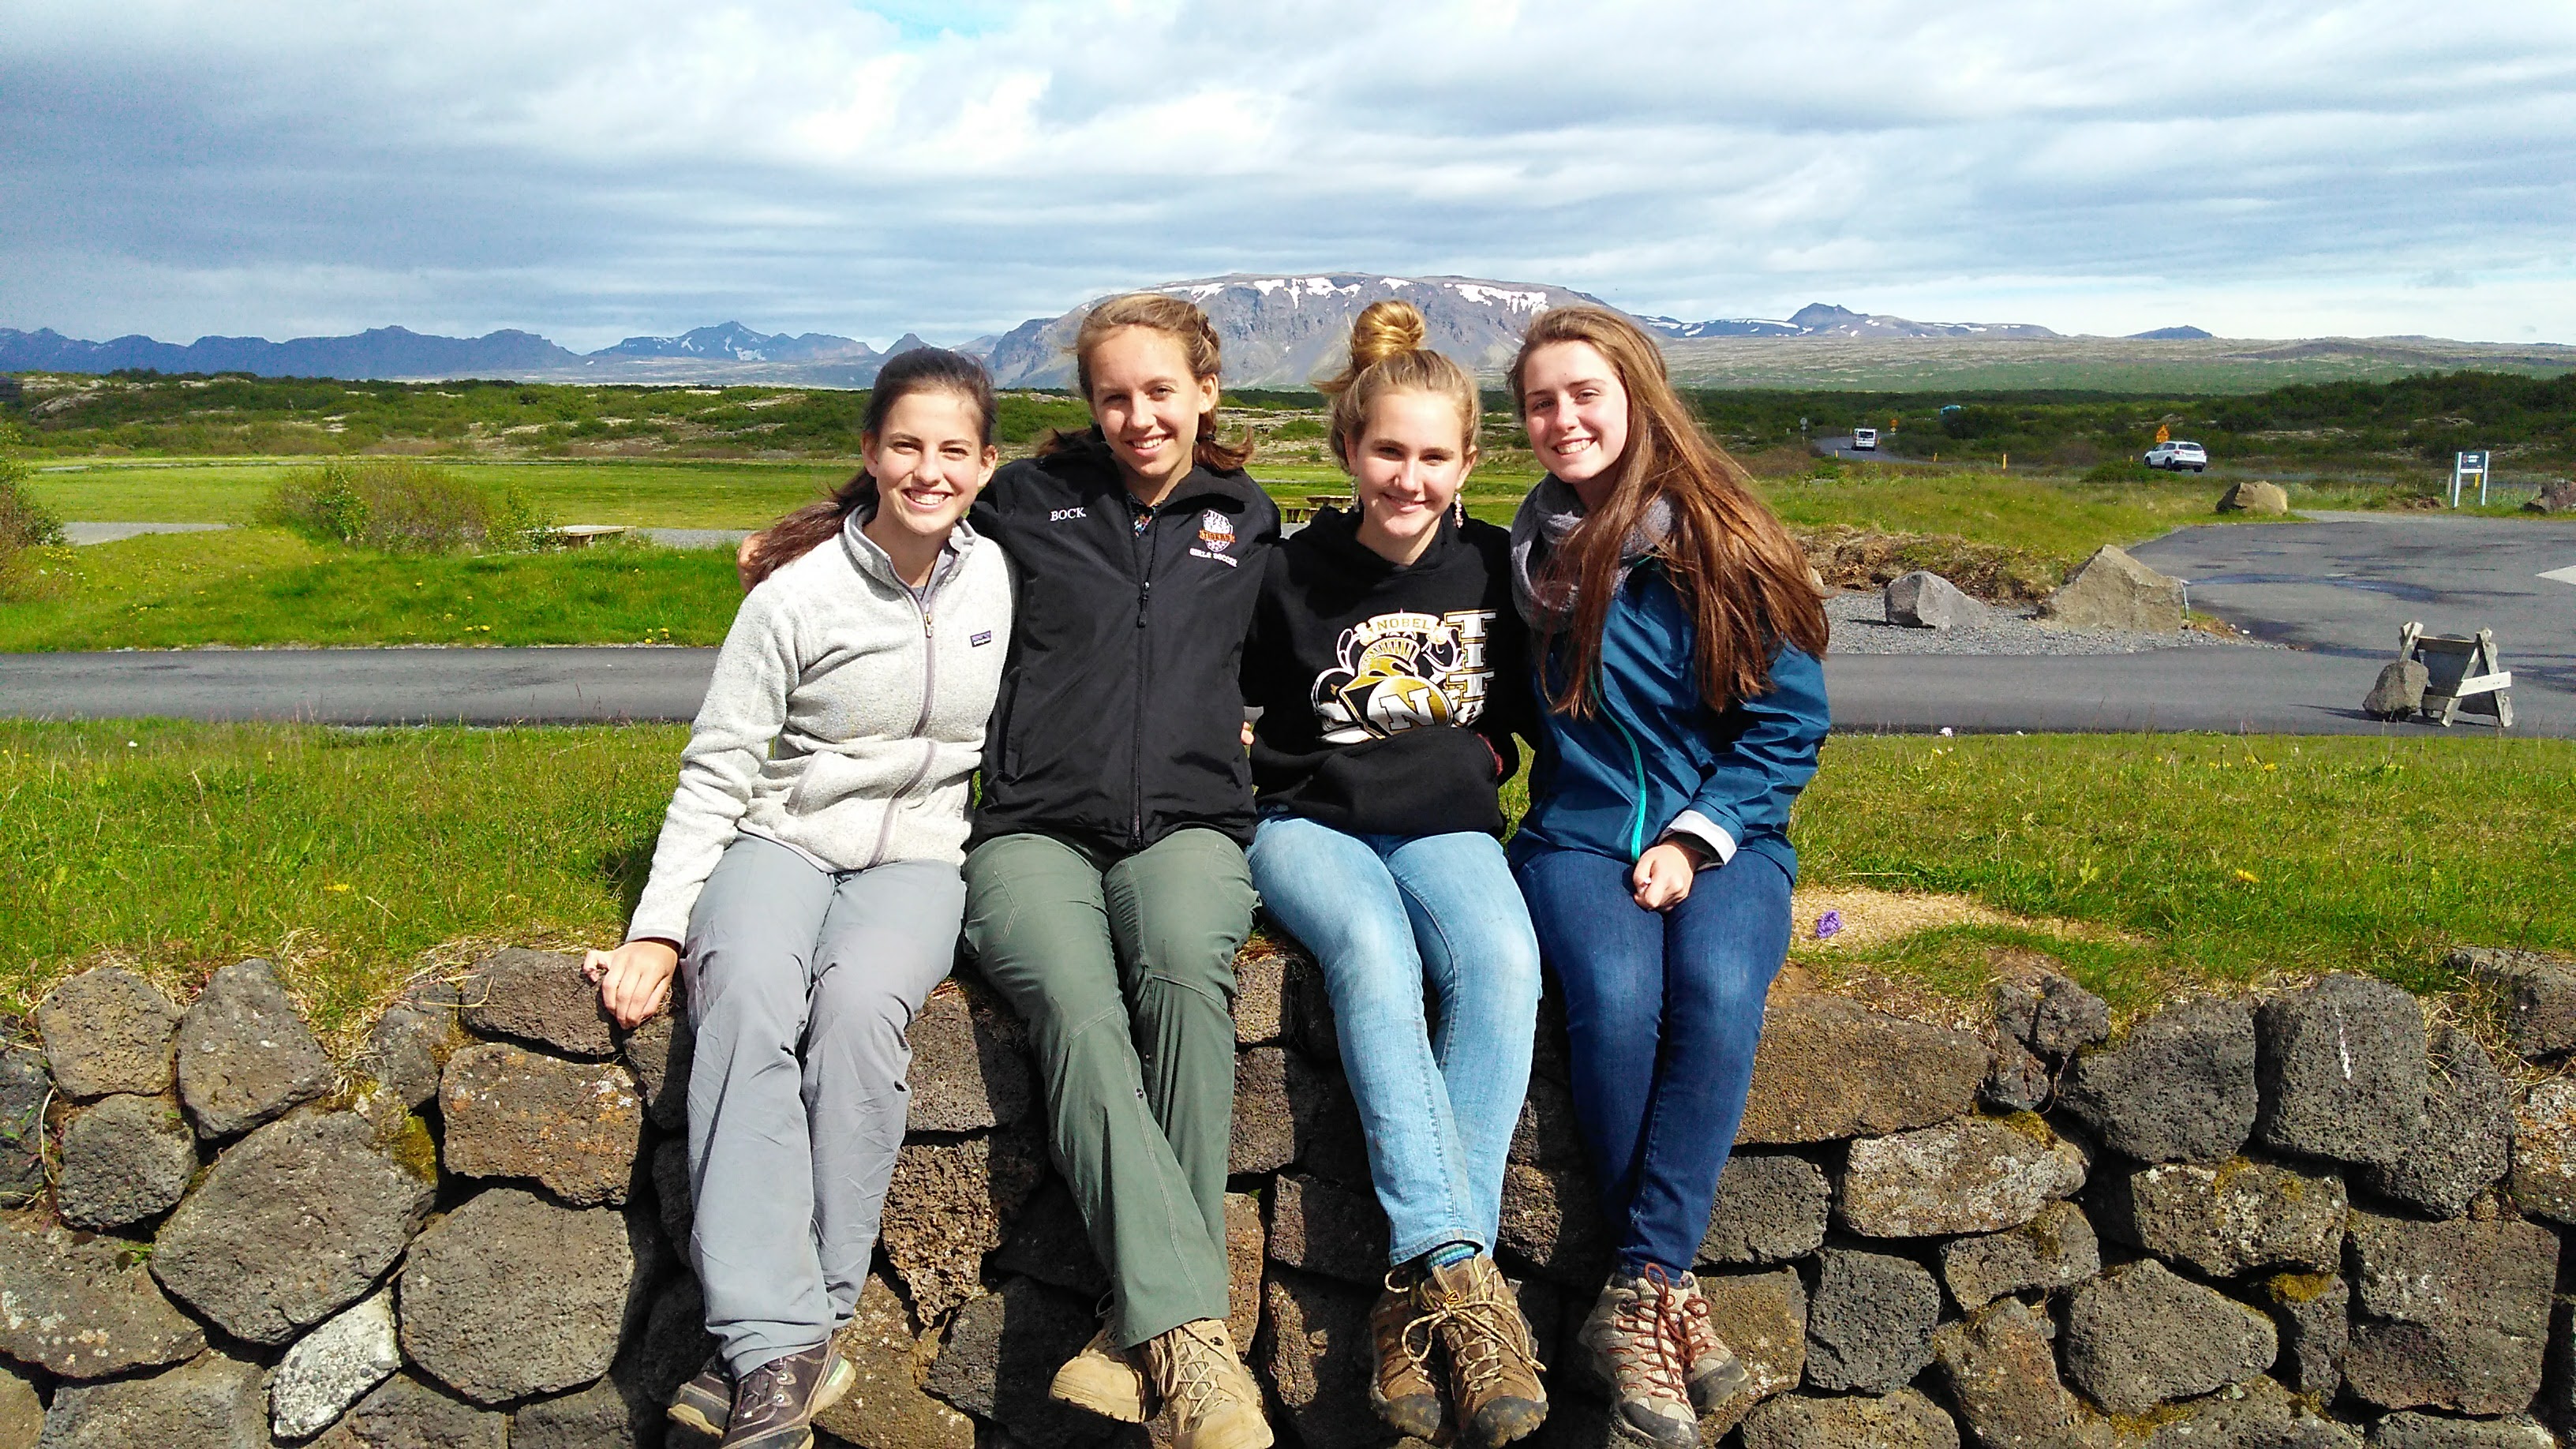 Сайт Знакомств С Девушками Из Исландии